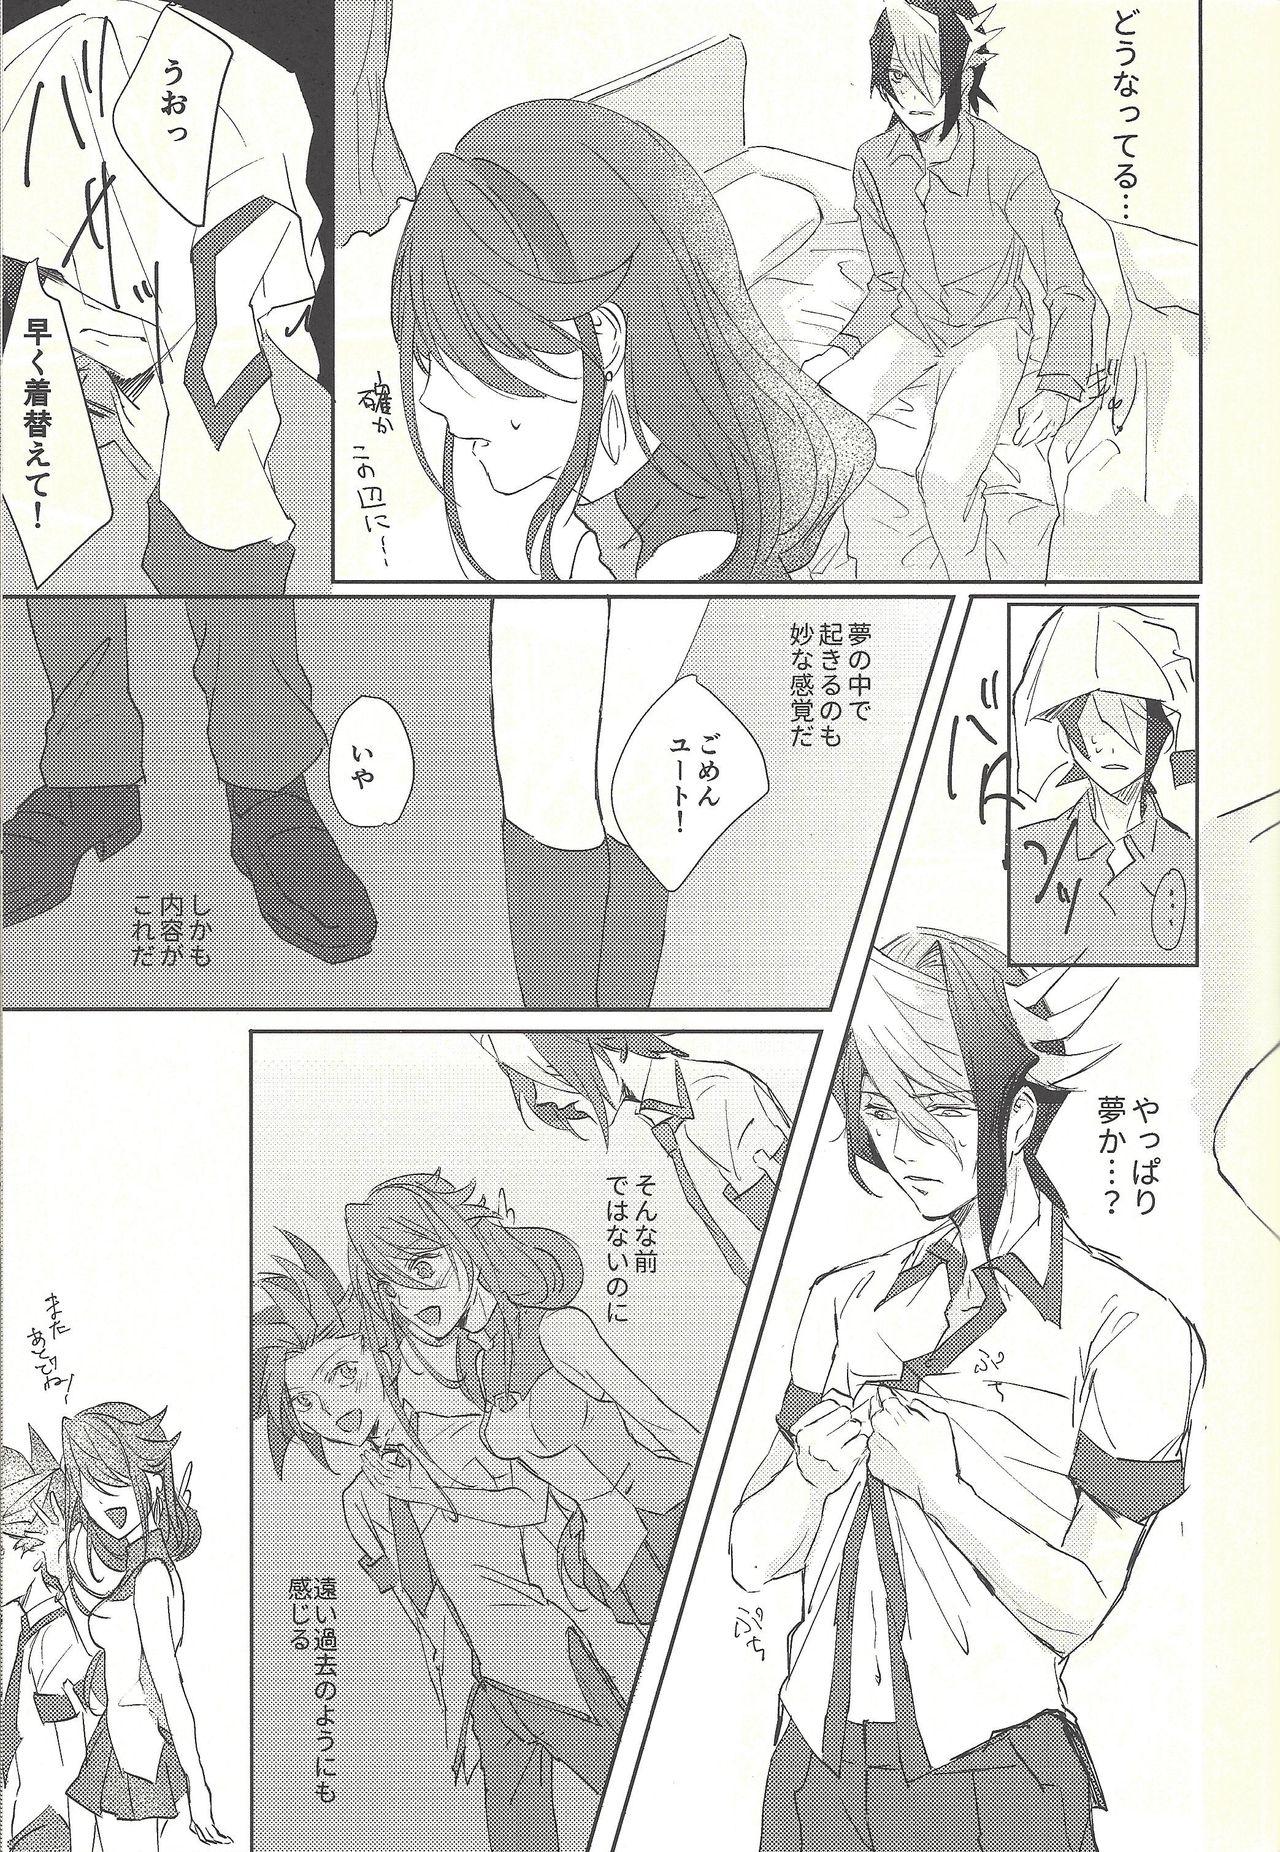 Slapping Owari no Ato - Yu-gi-oh arc-v Scene - Page 6